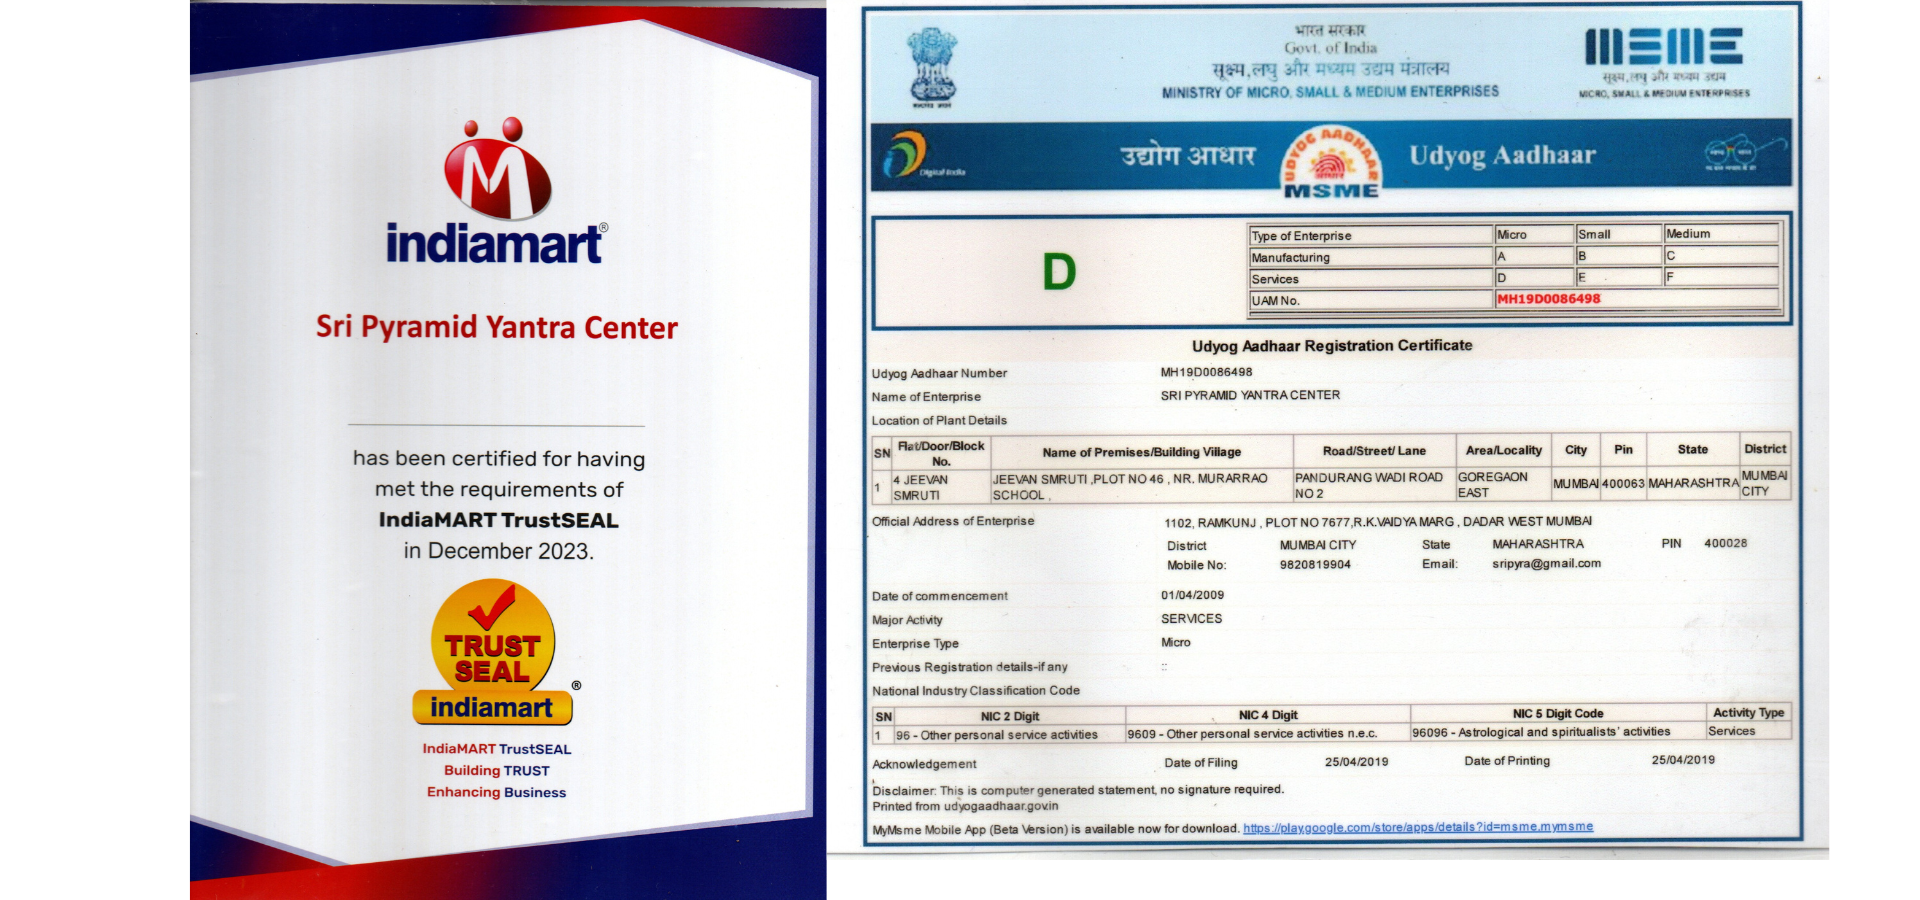 India Mart Trust Seal And Udyog Aadhar For Sri Pyramid Yantra Center